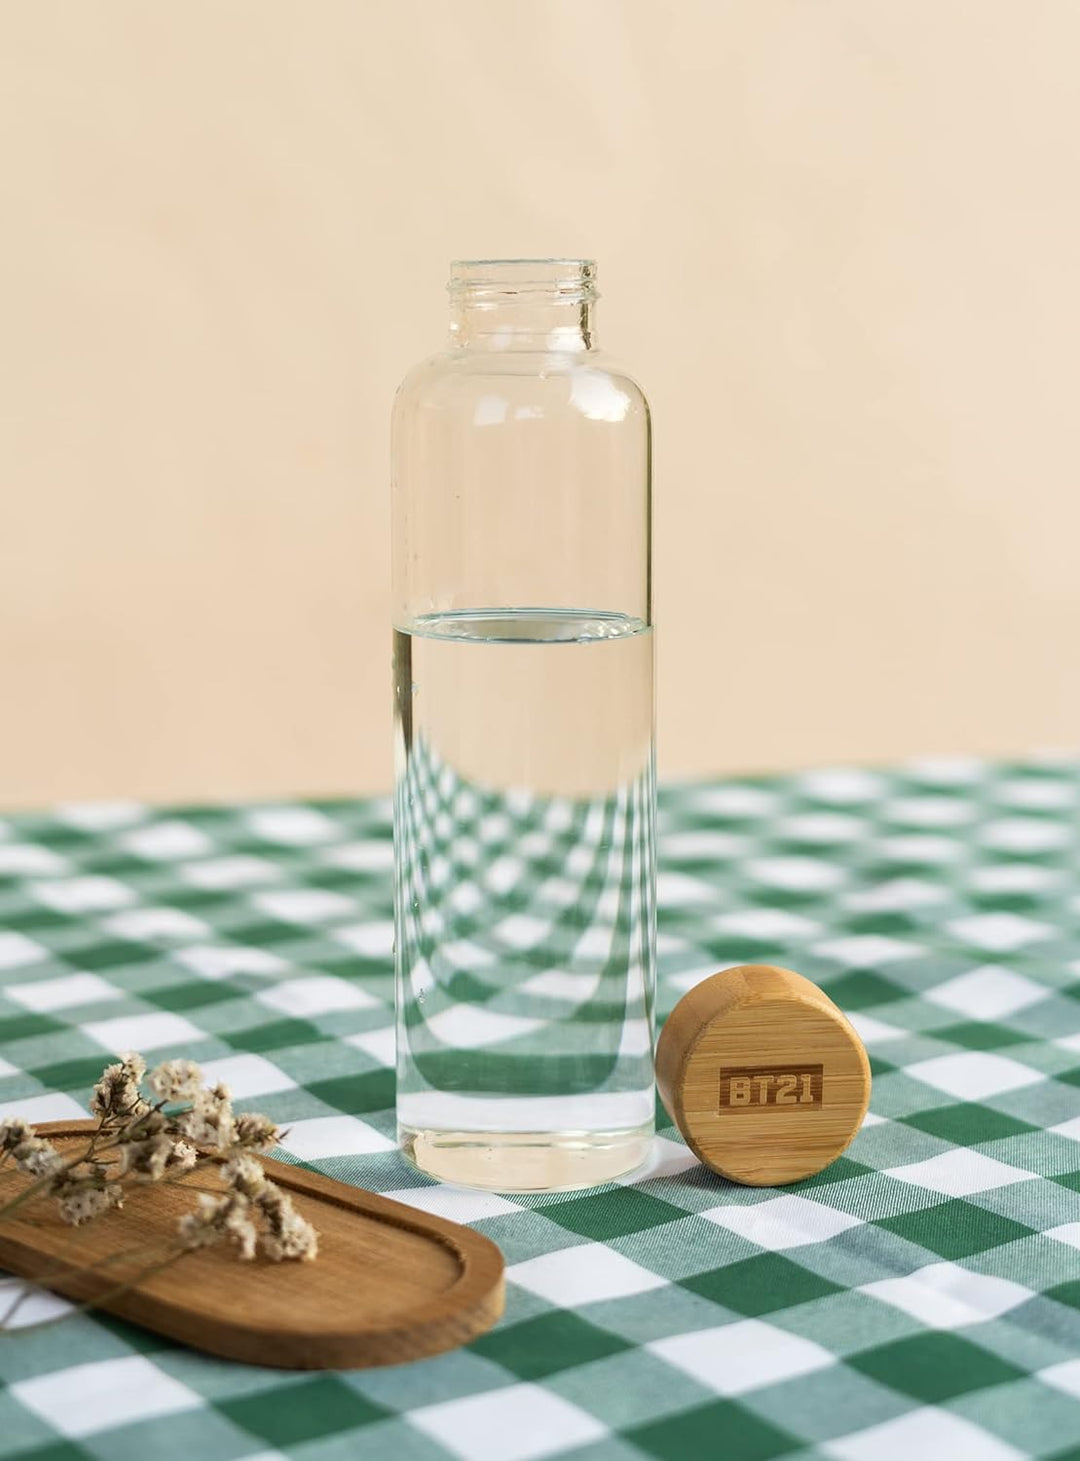 Grupo Erik Unisex youth BT21 Official Merchandise Chimmy Glass Water Bottle